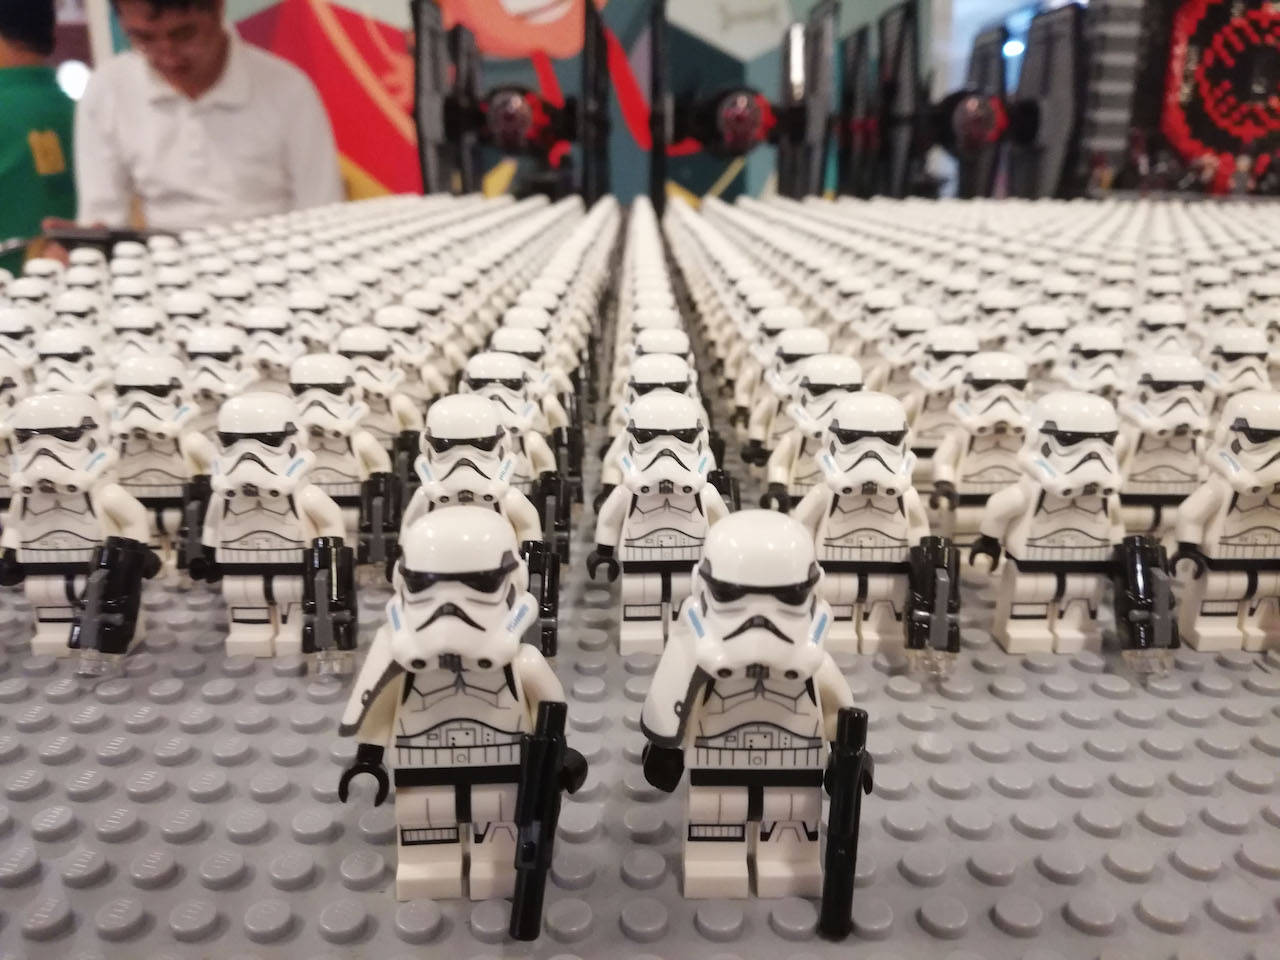 Hundreds of Stormtrooper lego on display